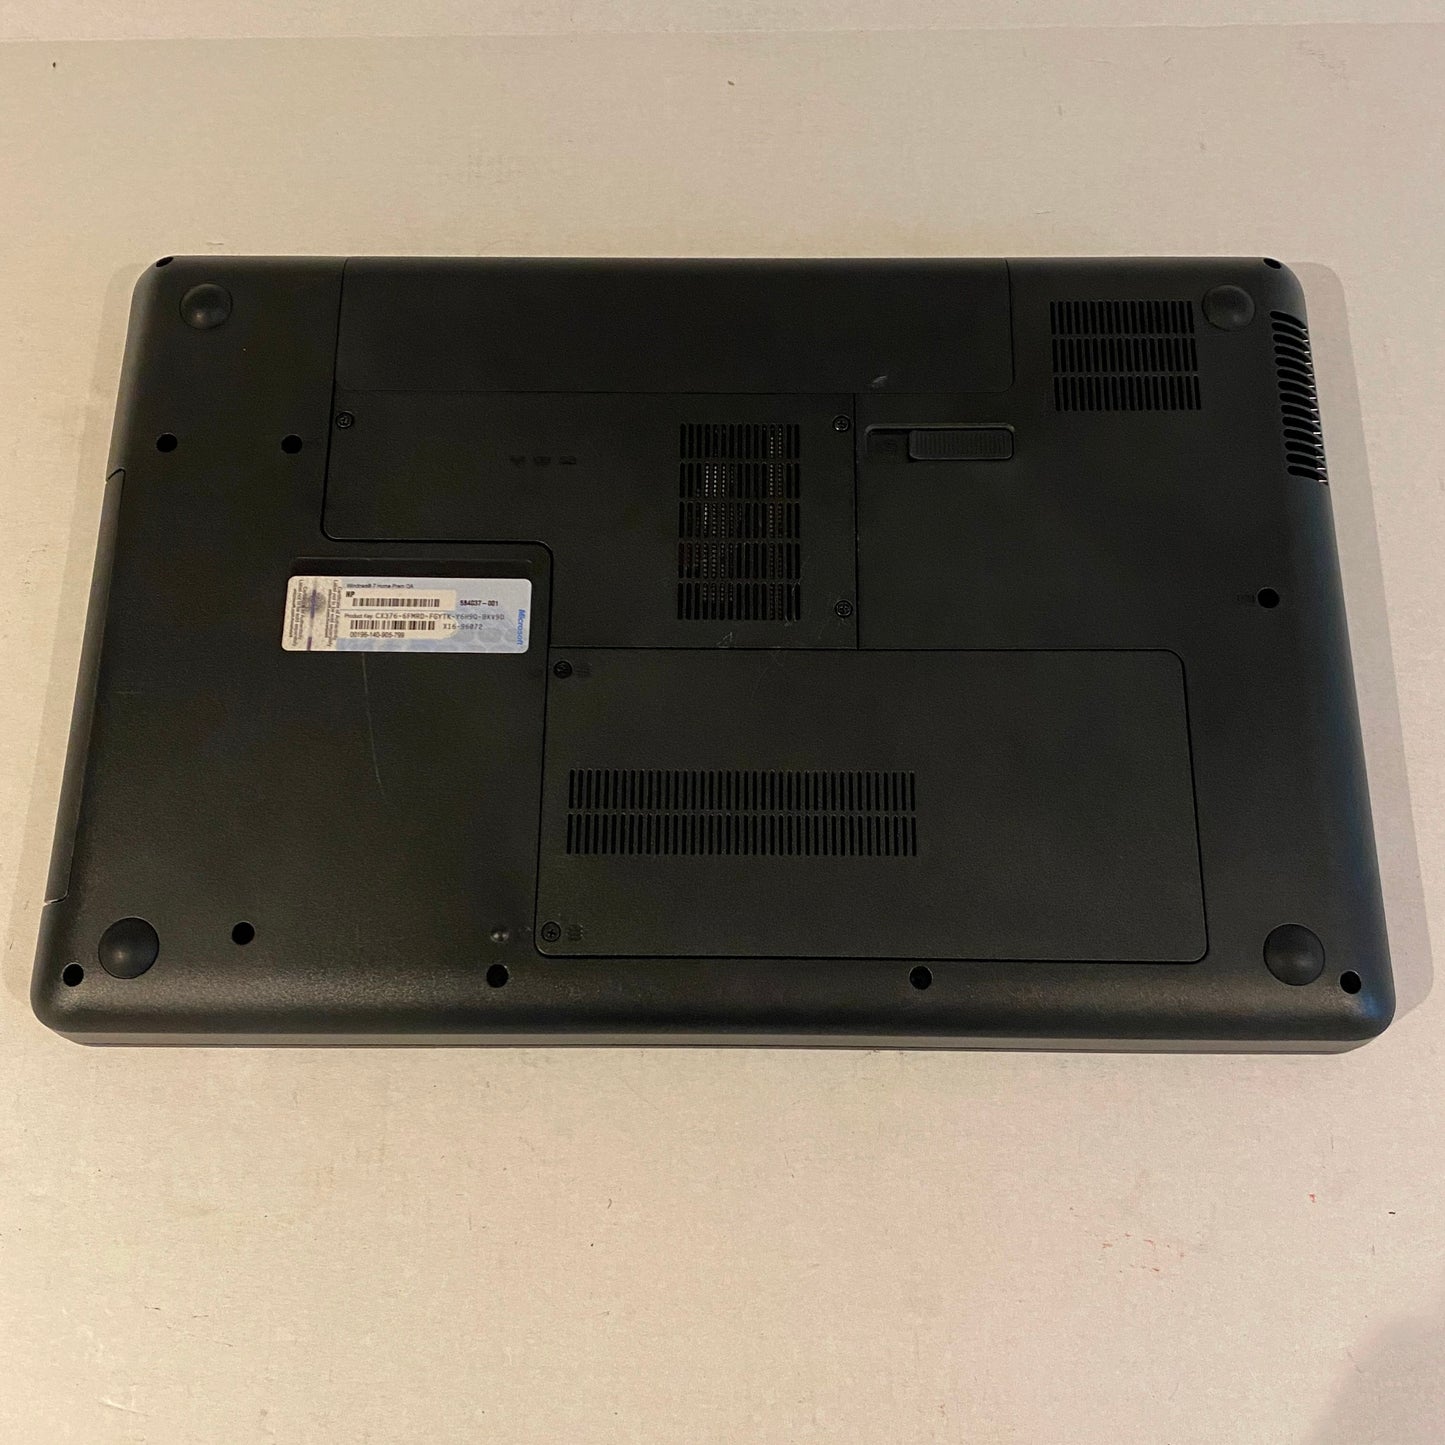 For Parts or Repair - 15" Compaq Presario CQ56 Laptop - No HDD